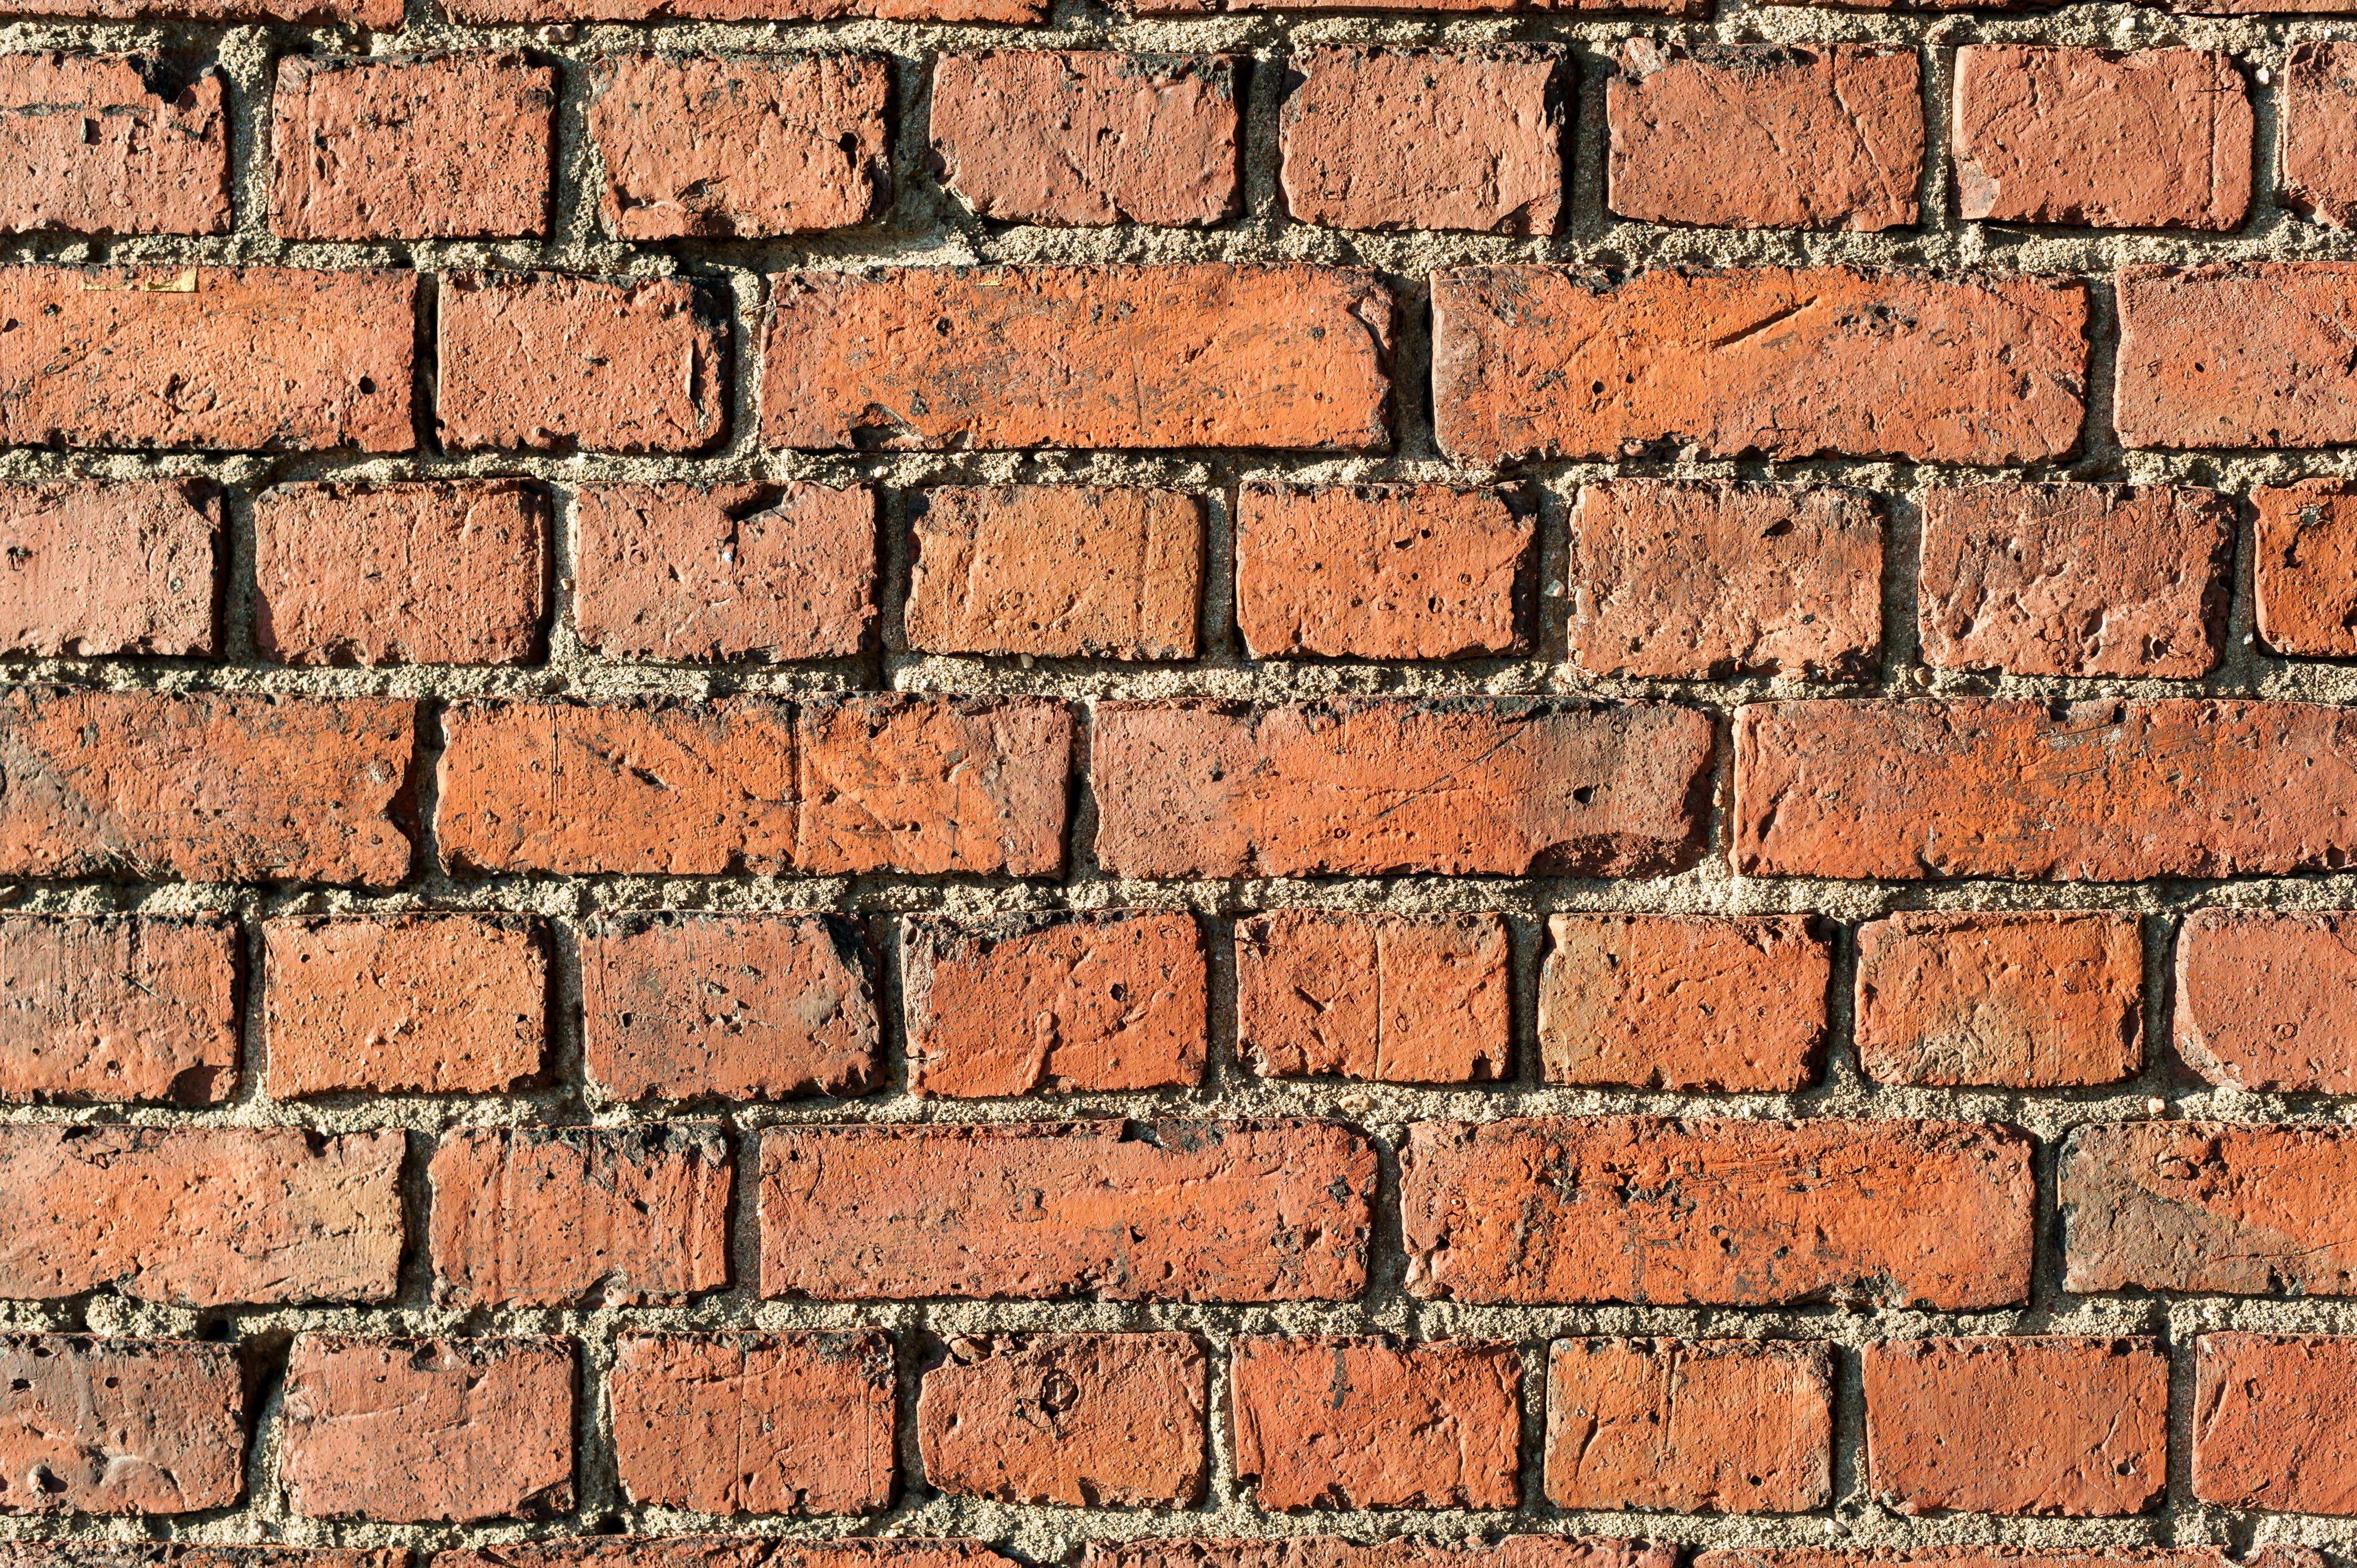 Wall, Brick Wall, Old Wall, Bricks, brick wall, wall - building feature